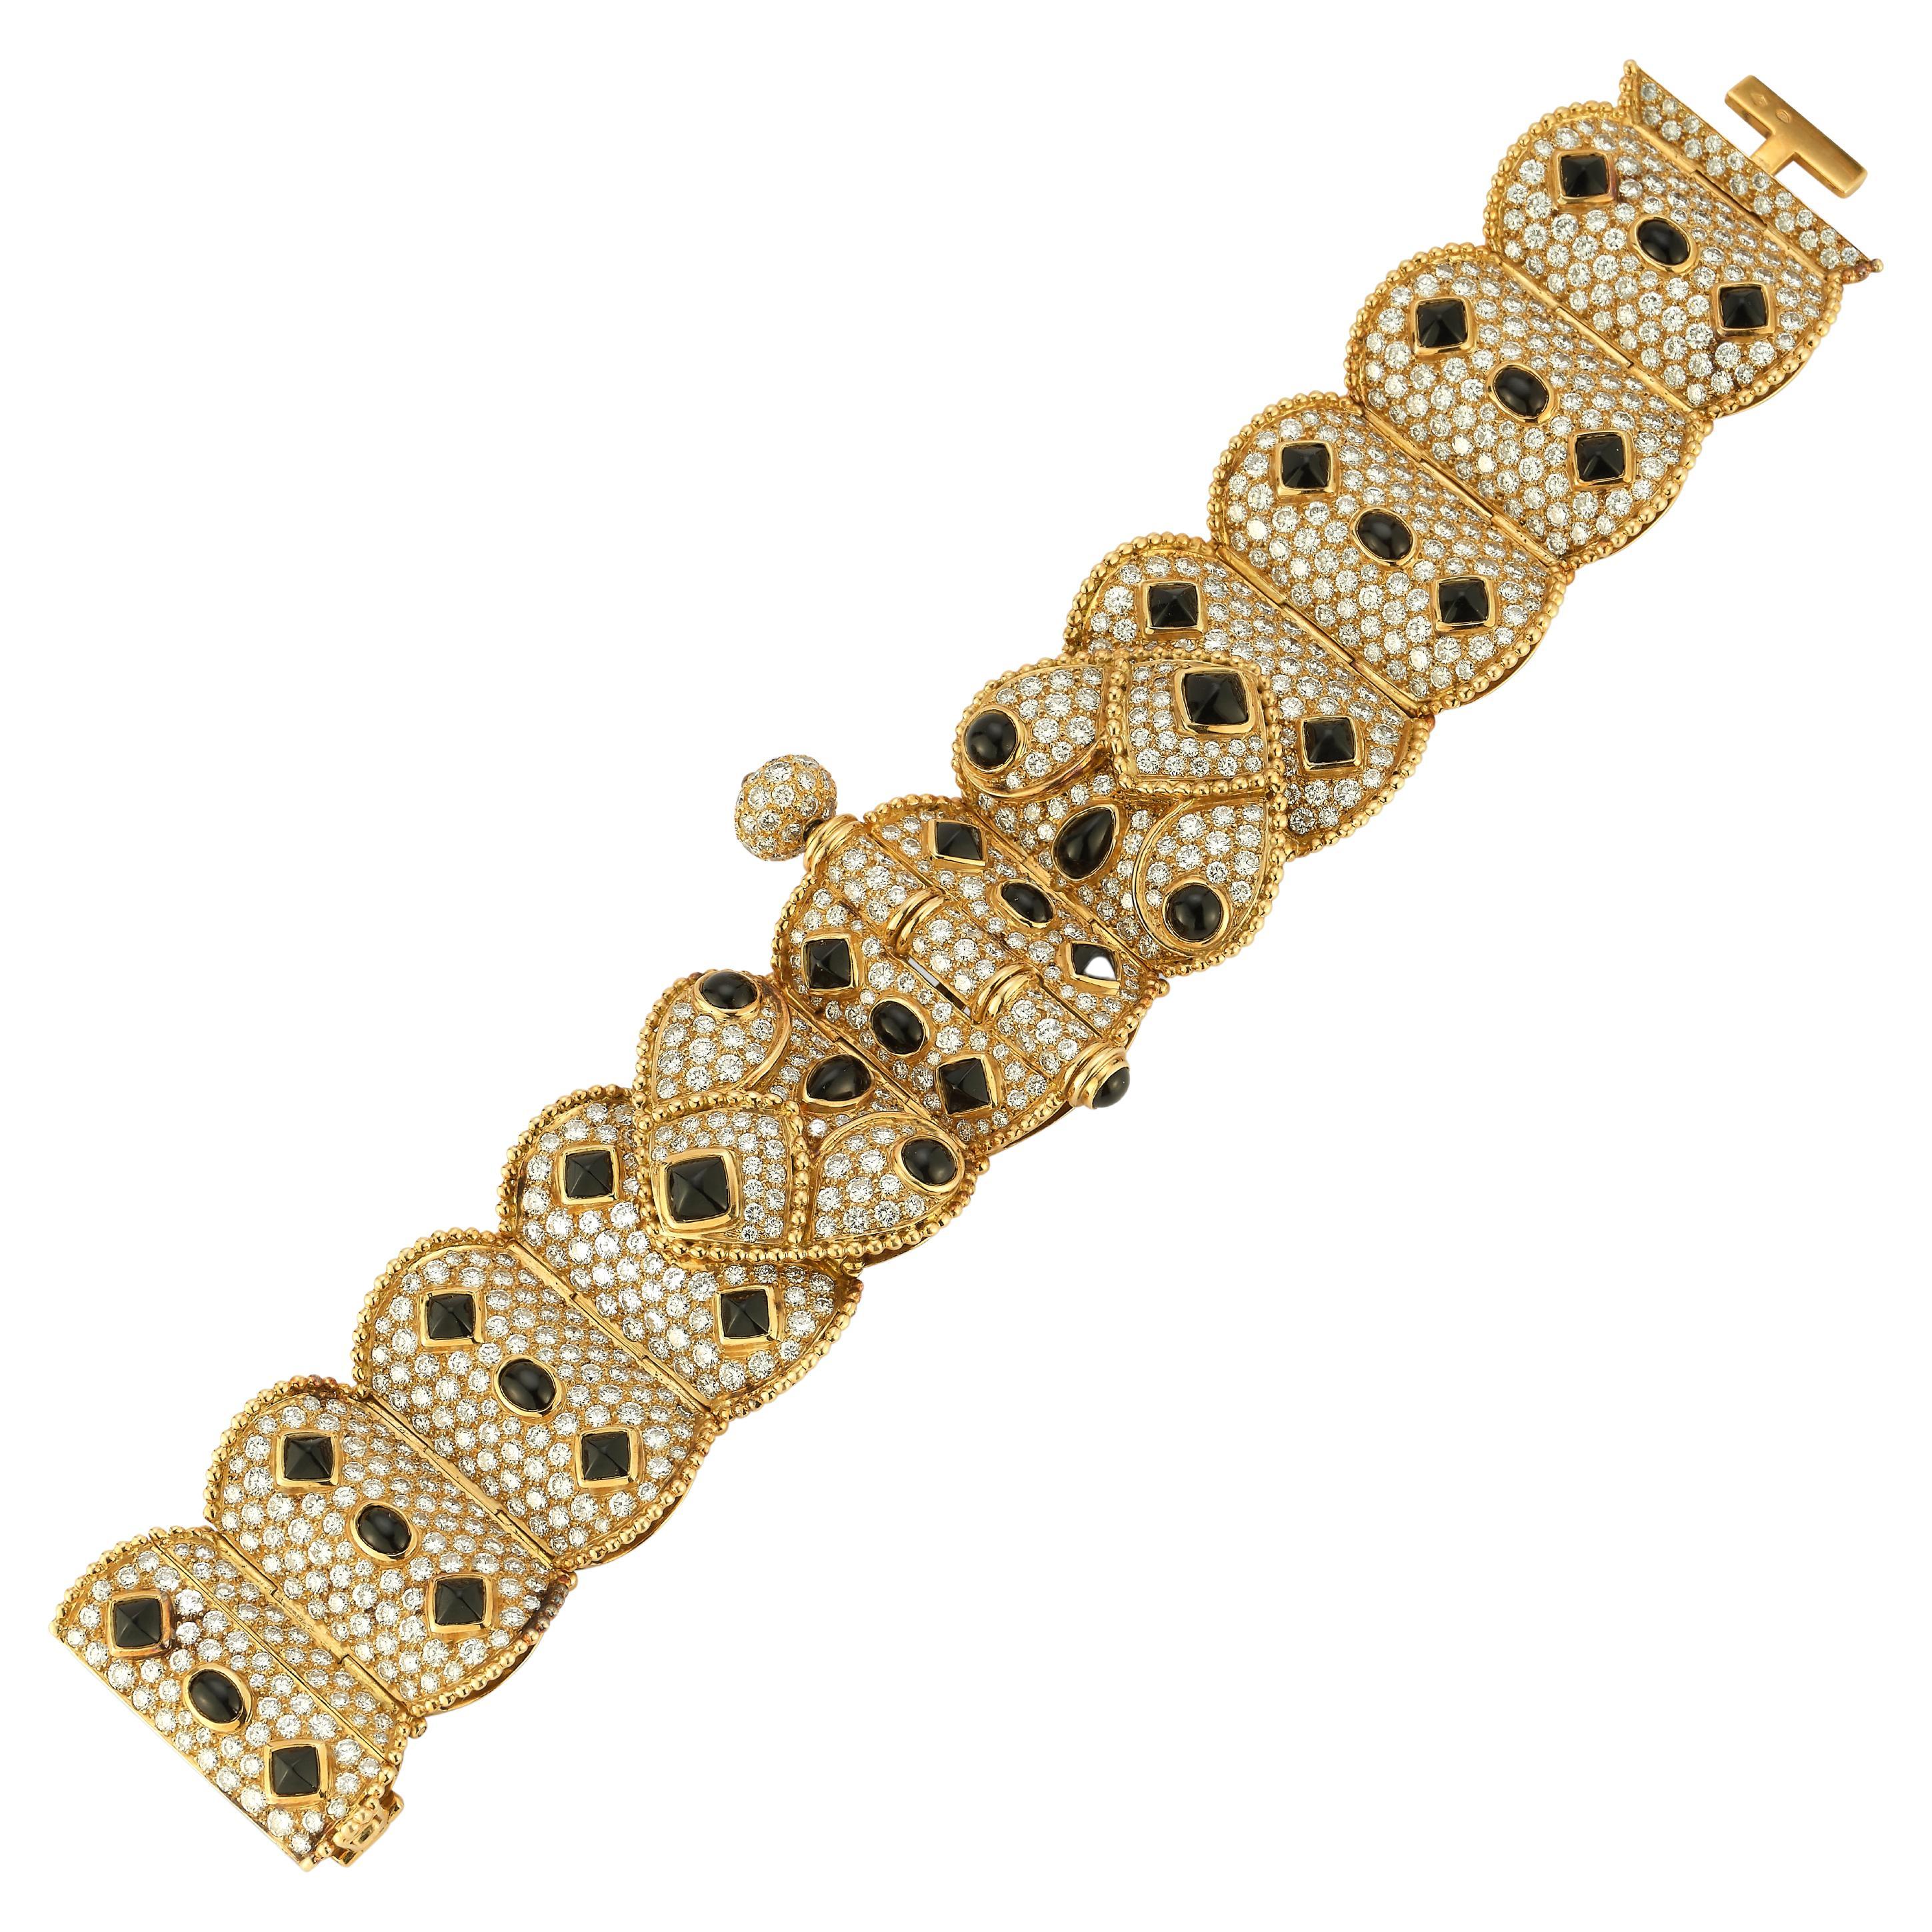 Boucheron Diamond & Onyx Gold Bracelet